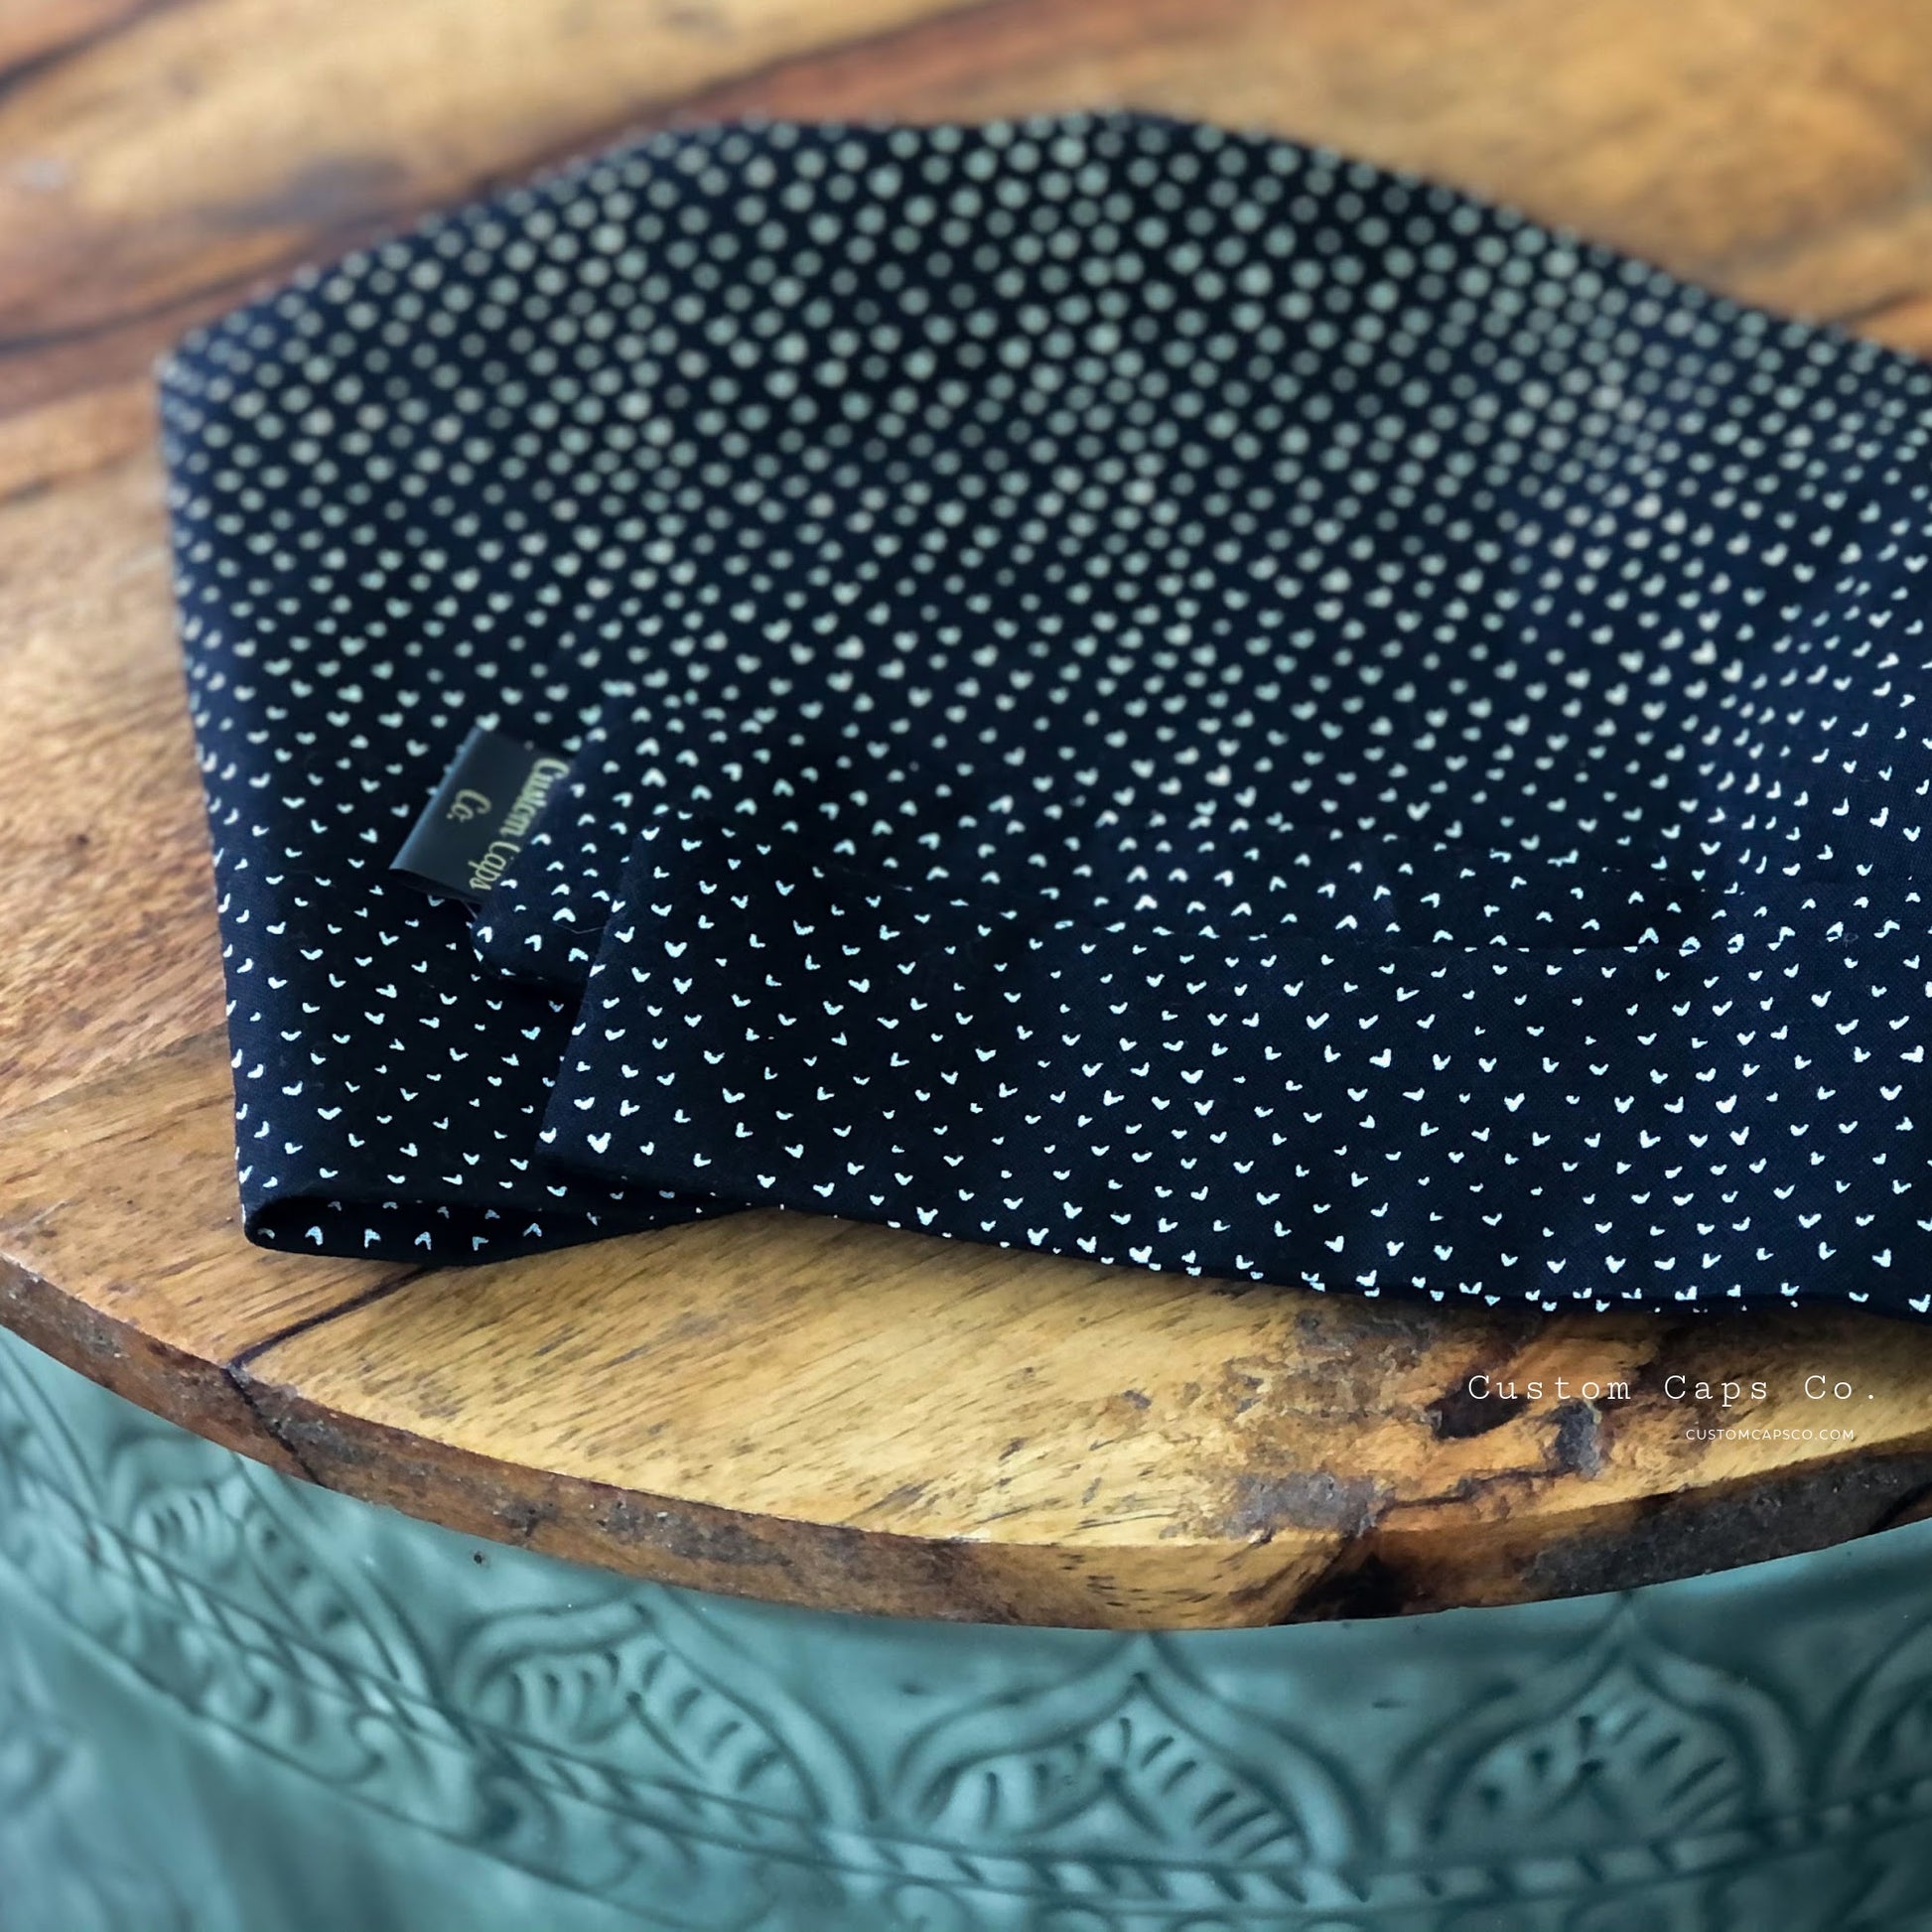 Mini Hearts on Black | Pixie - Custom Caps Co. 